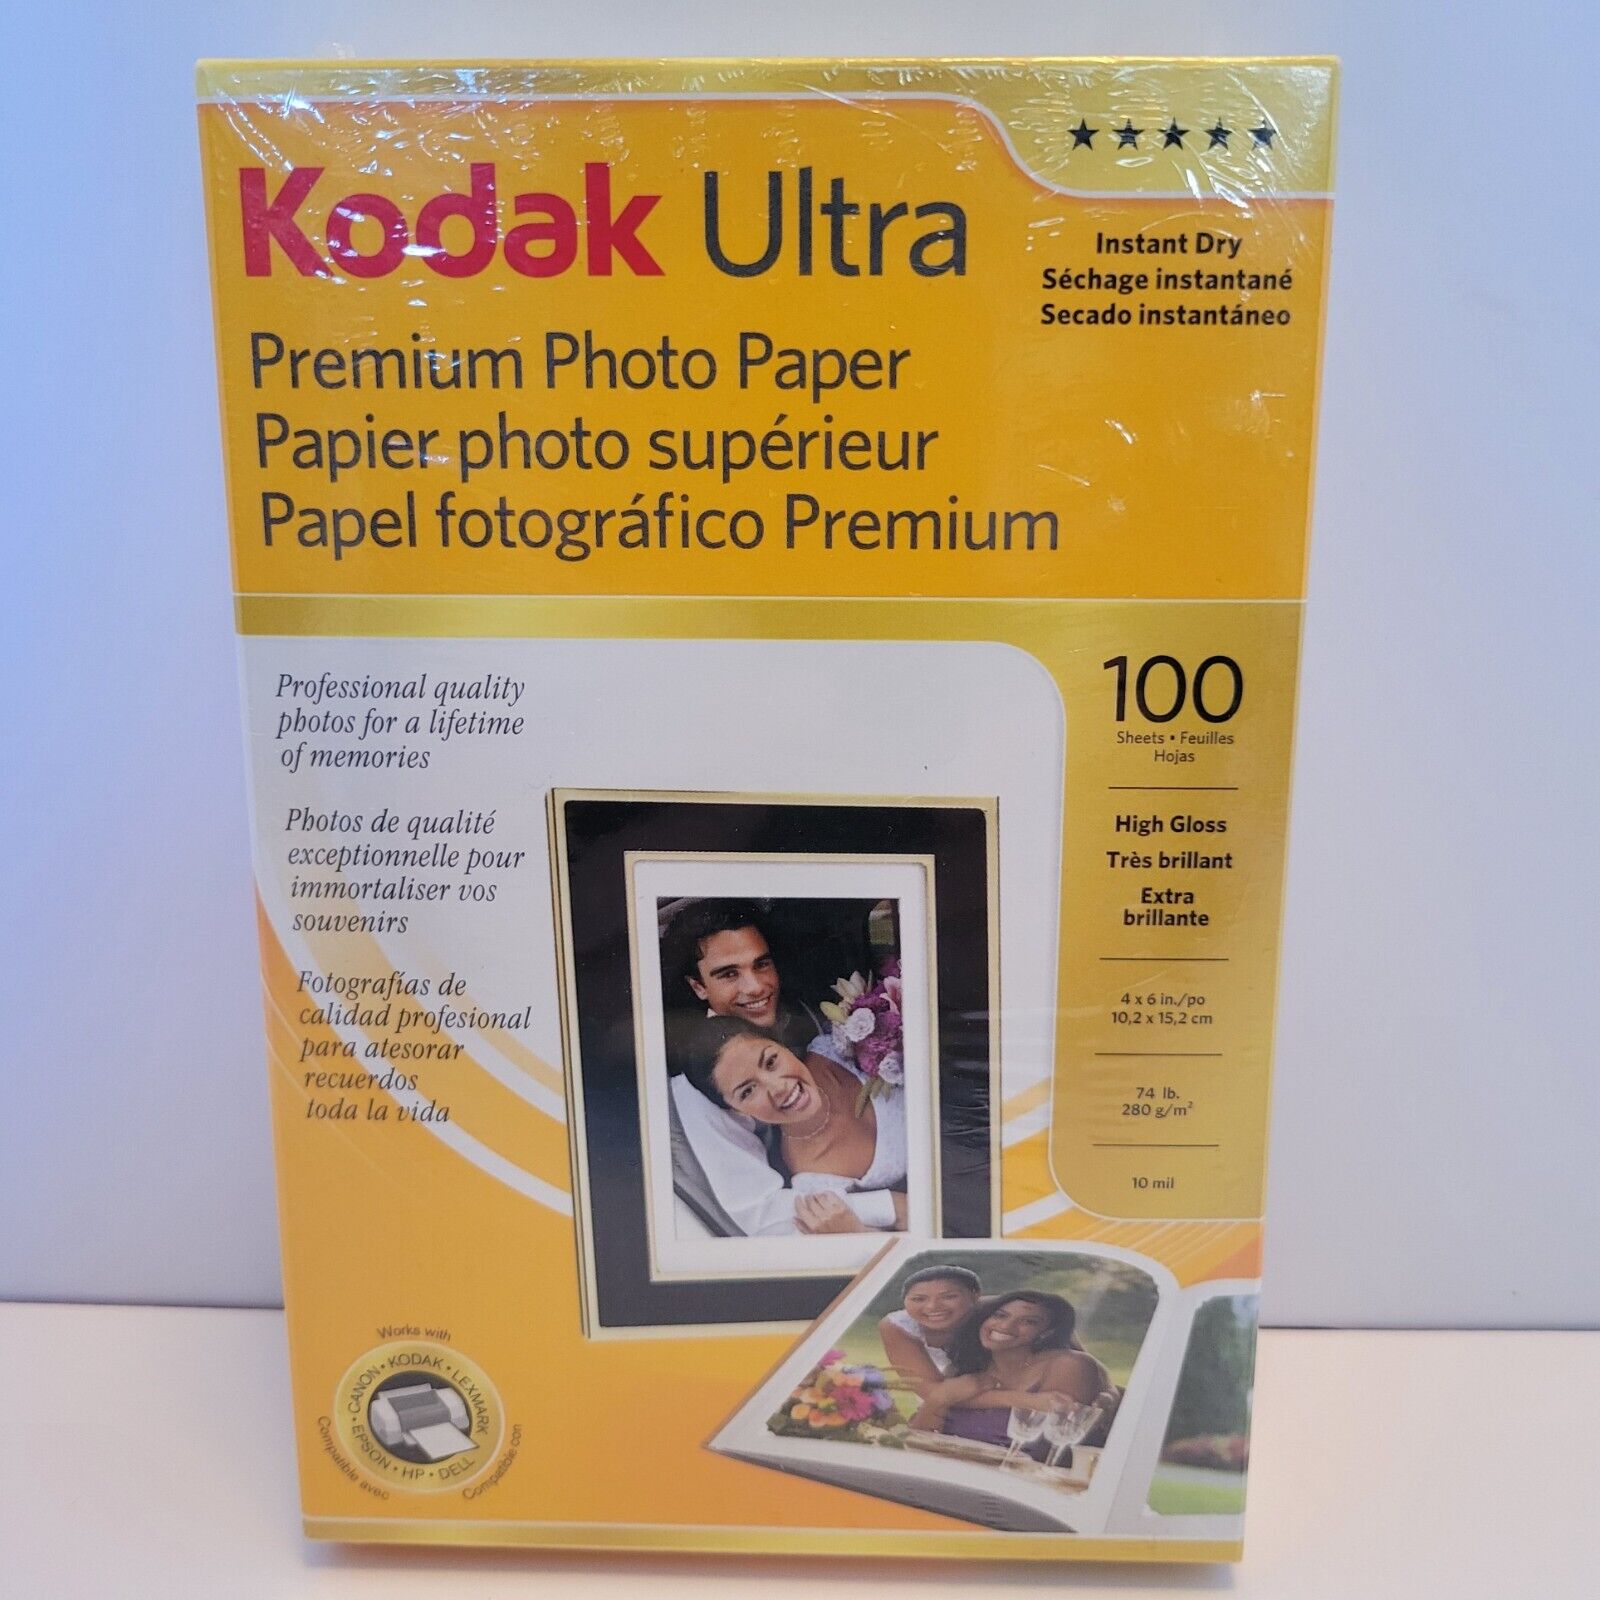 Kodak Ultra-Premium Photo Paper 4x6 Instant Dry High Gloss 100 sheets New 2007